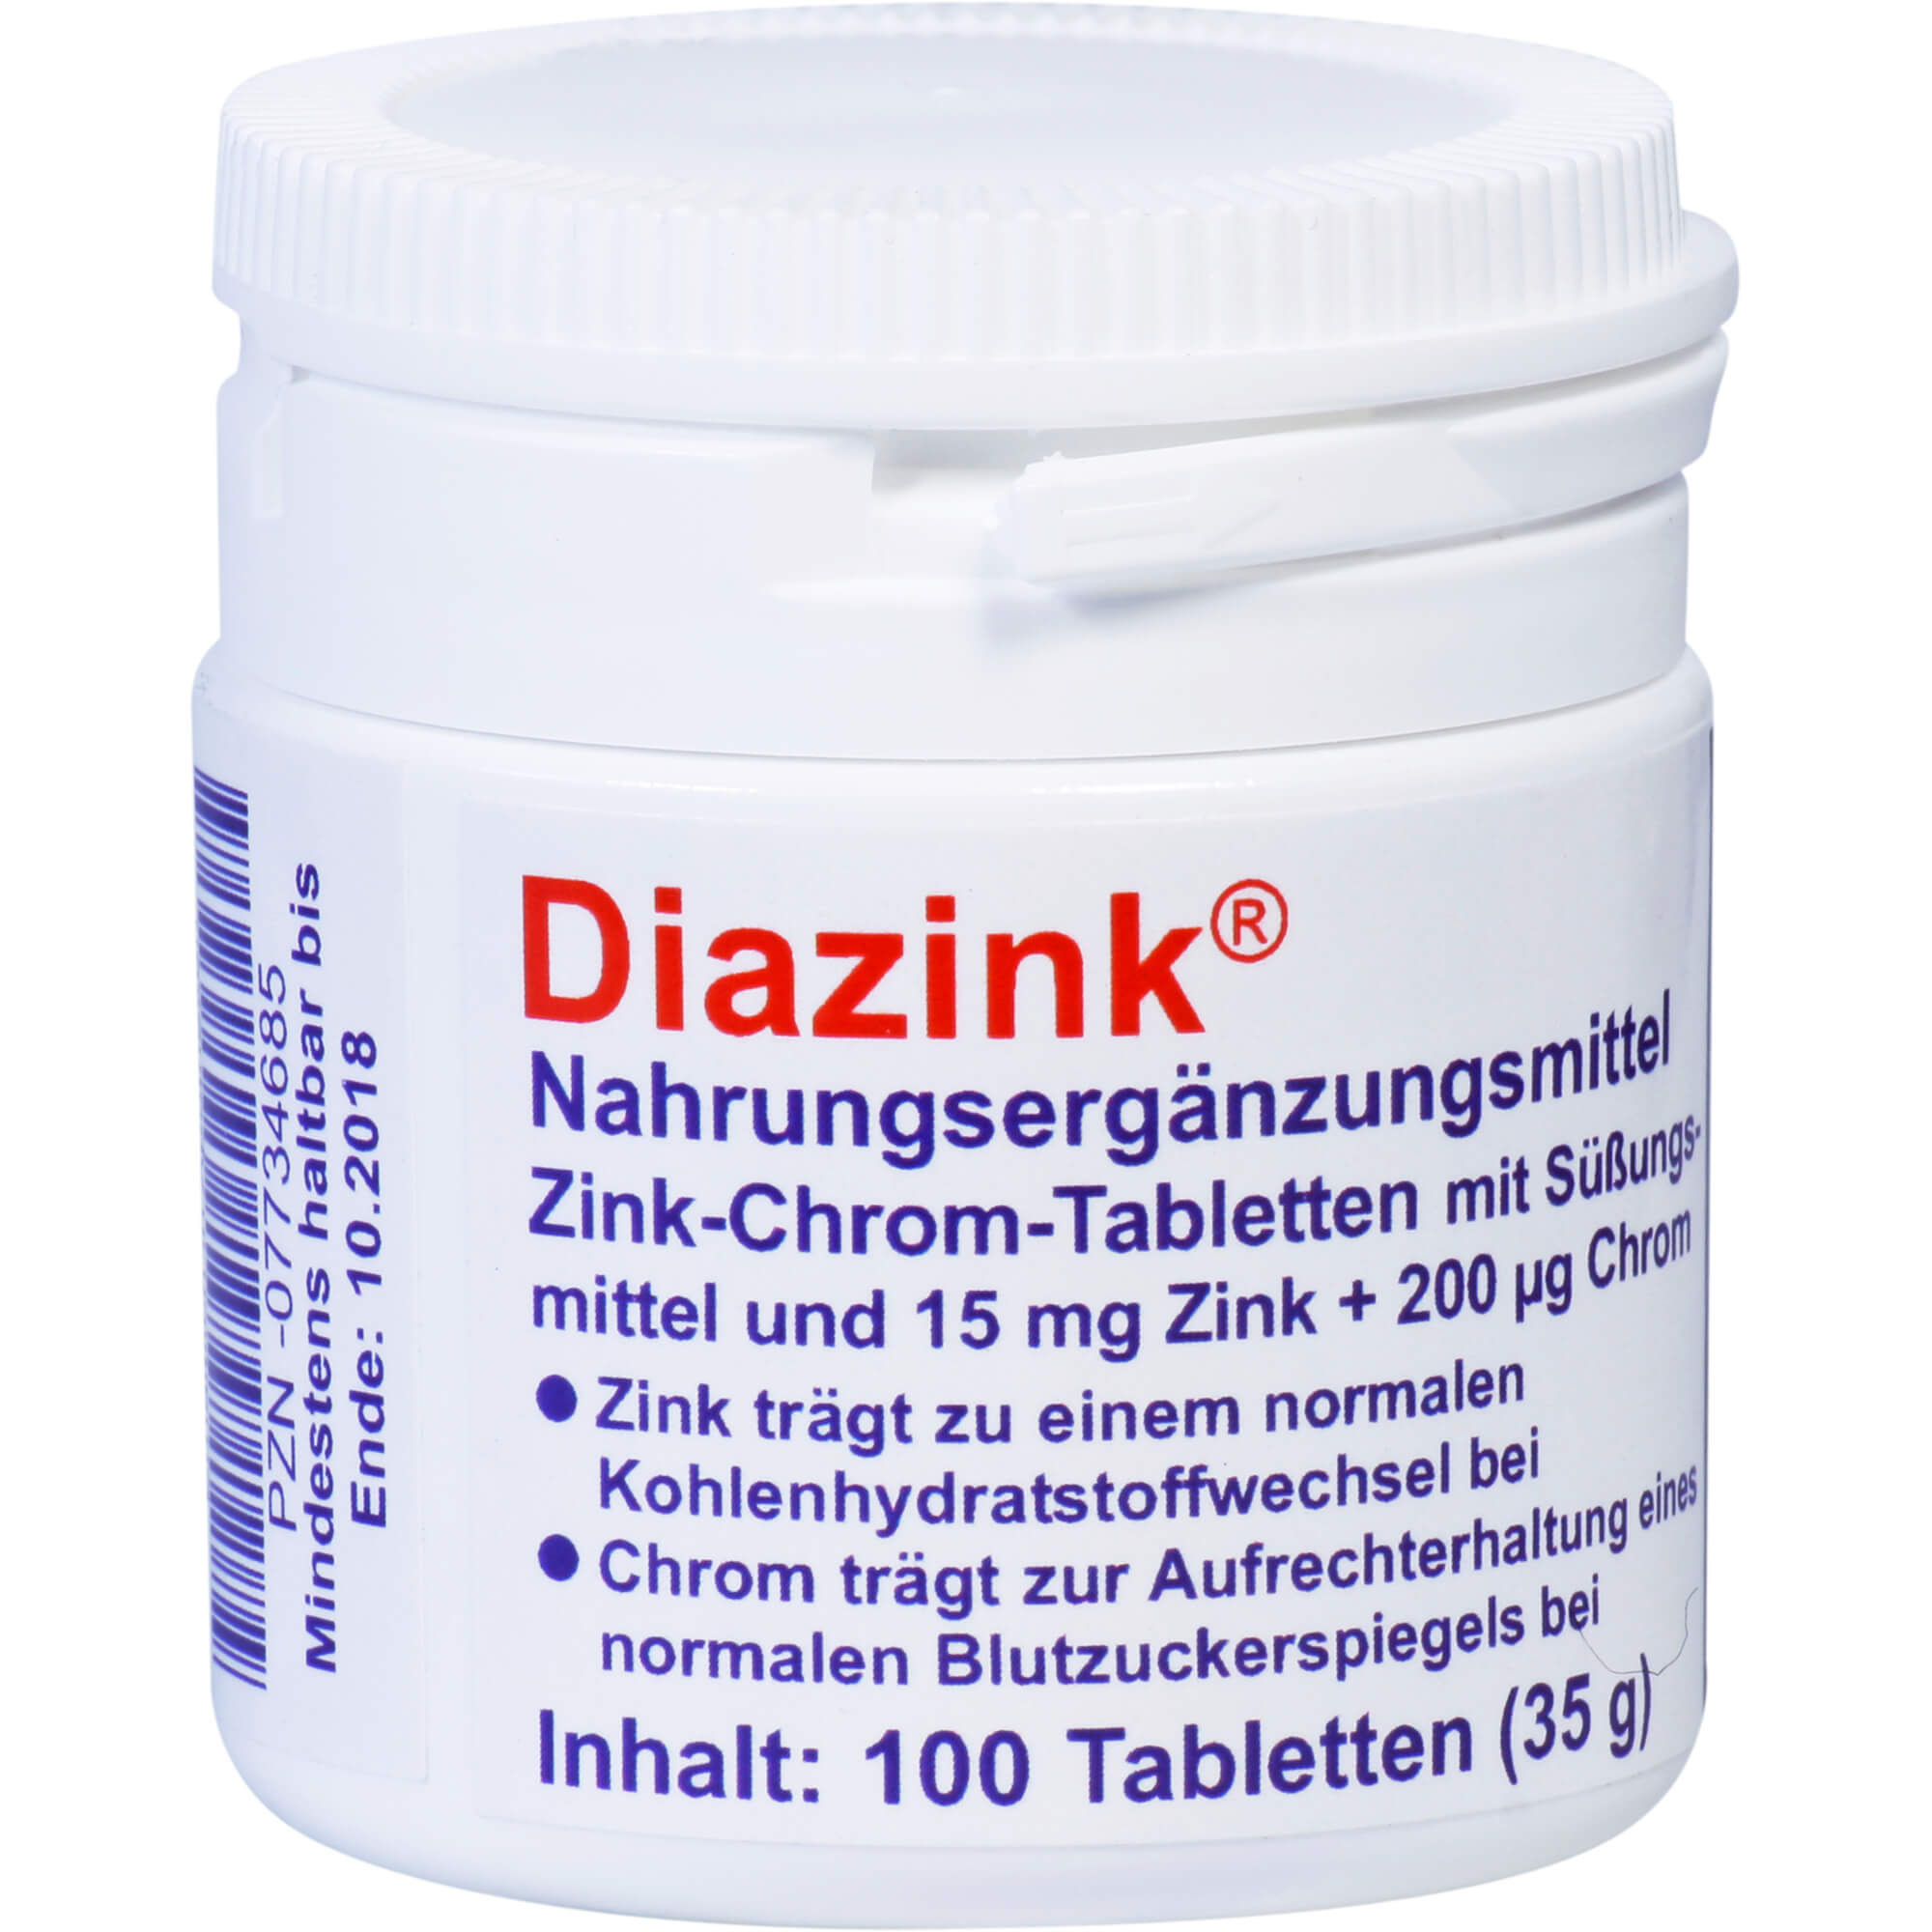 Zink-Chrom-Tabletten bei Diabetes mellitus, Dialysebehandlung.